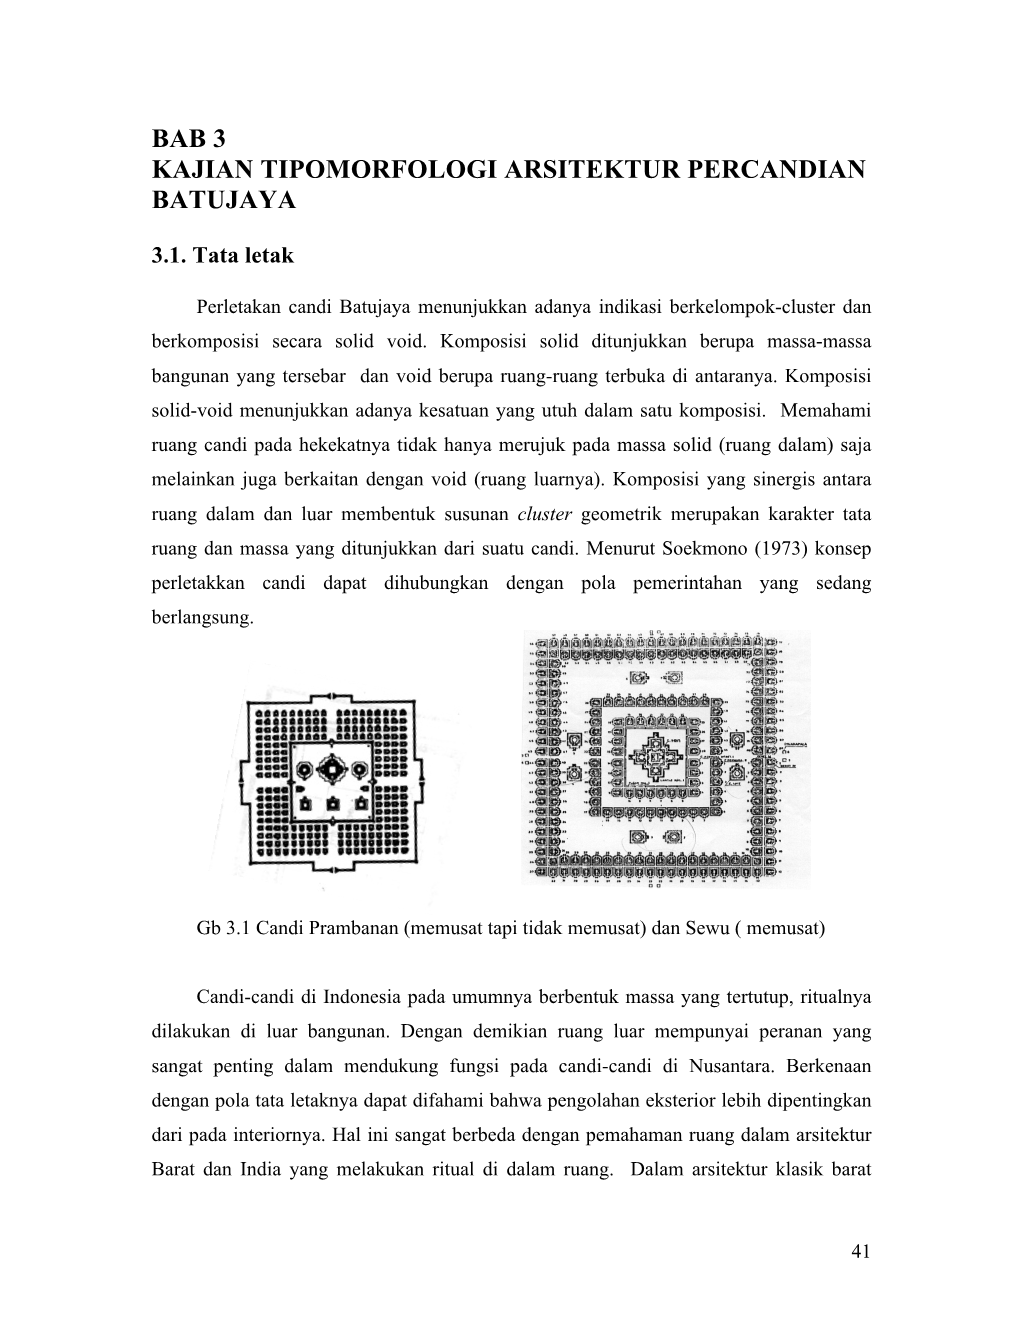 Bab 3 Kajian Tipomorfologi Arsitektur Percandian Batujaya